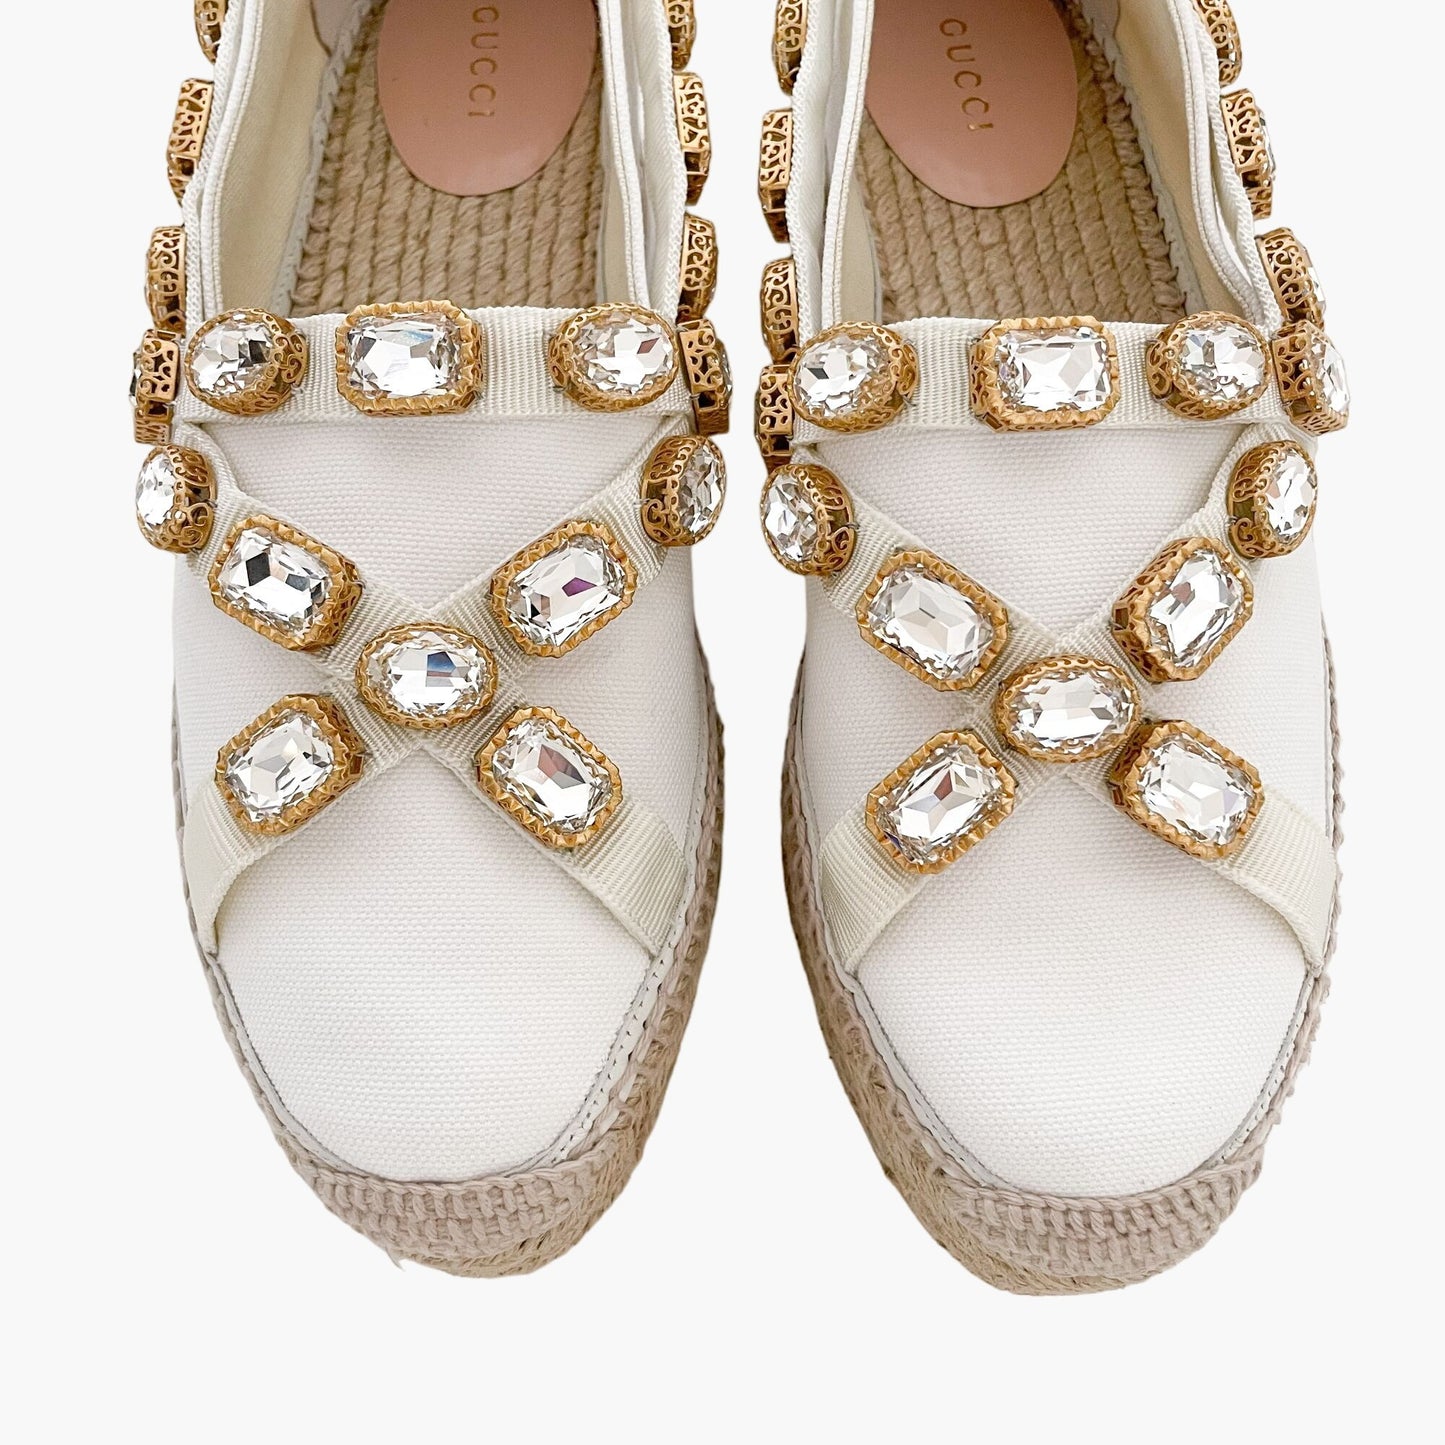 Gucci Pepita Crystal-Embellished Platform Espadrilles in White Canvas Size 40.5